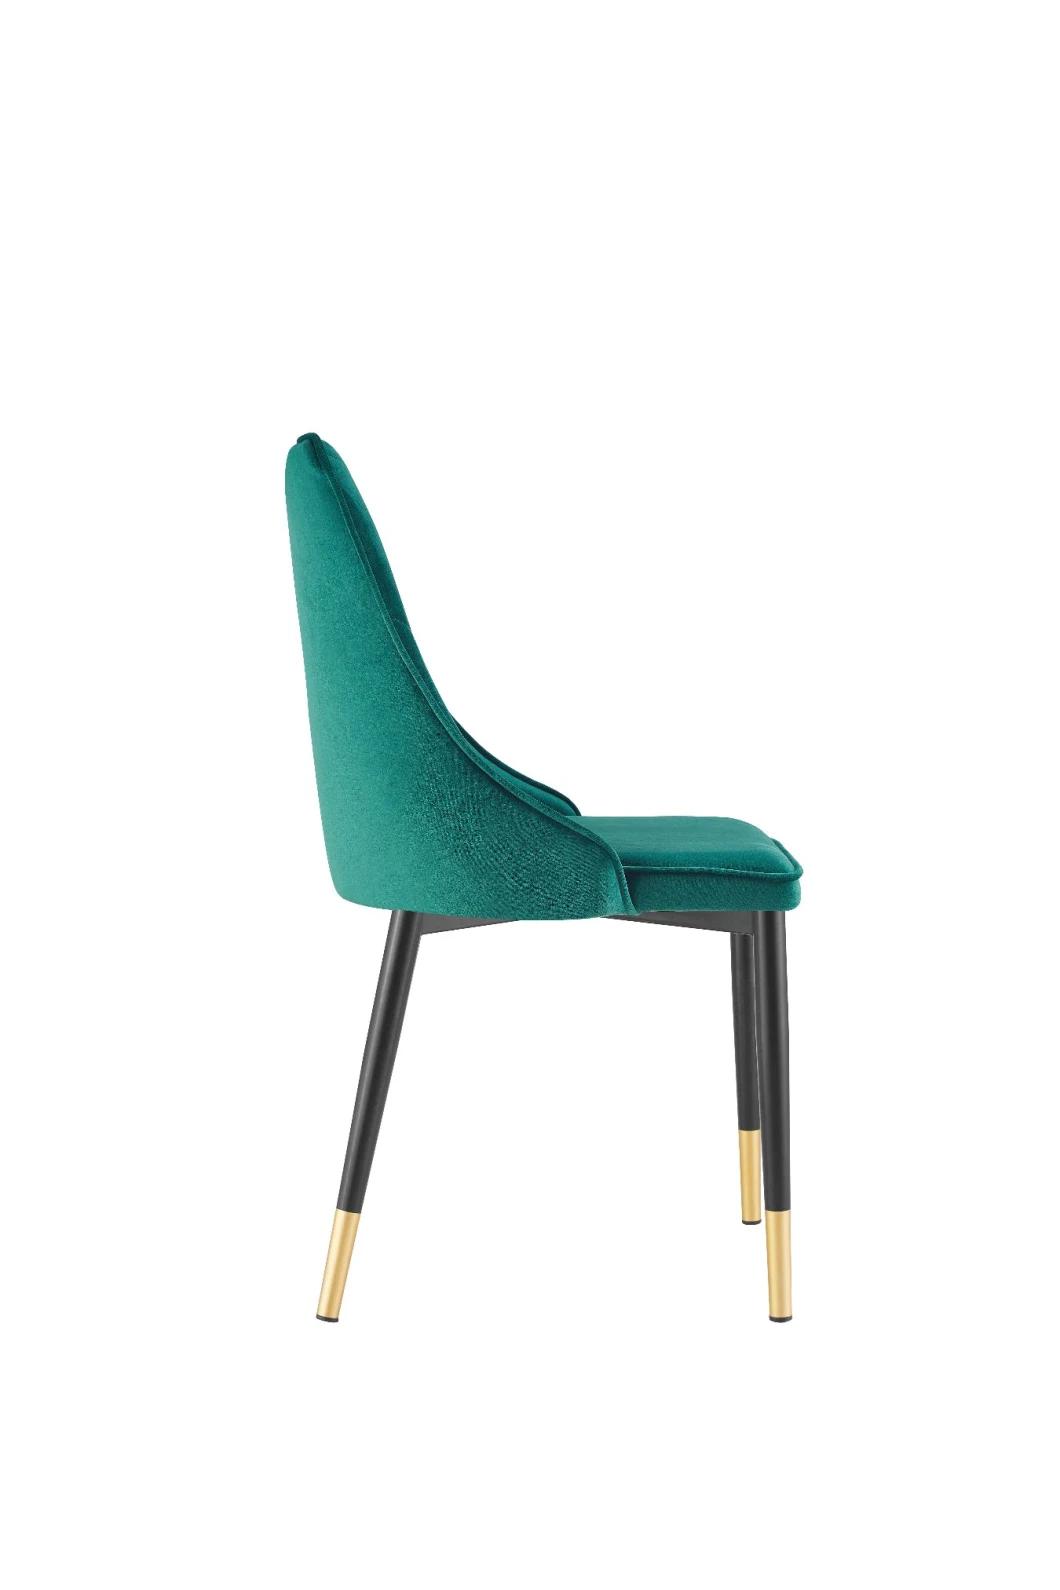 Dining Sofa Metal Chair Room Set Coffee Hotel Luxury Upholstered Soft Back Velvet Fabric